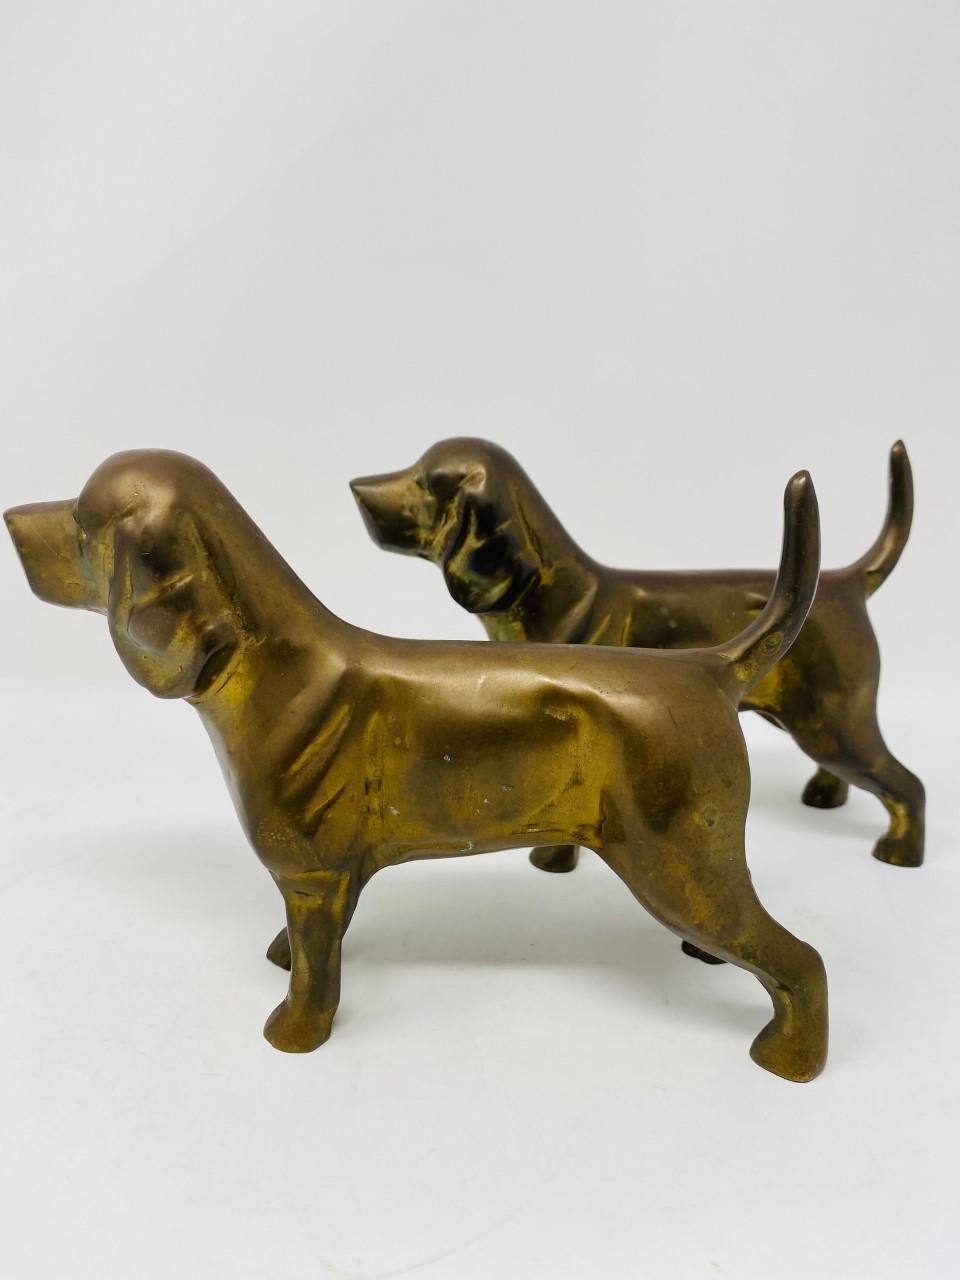 Cast 1950s Vintage Pair of Bronze Labrador Retriever Sculpture Bookends